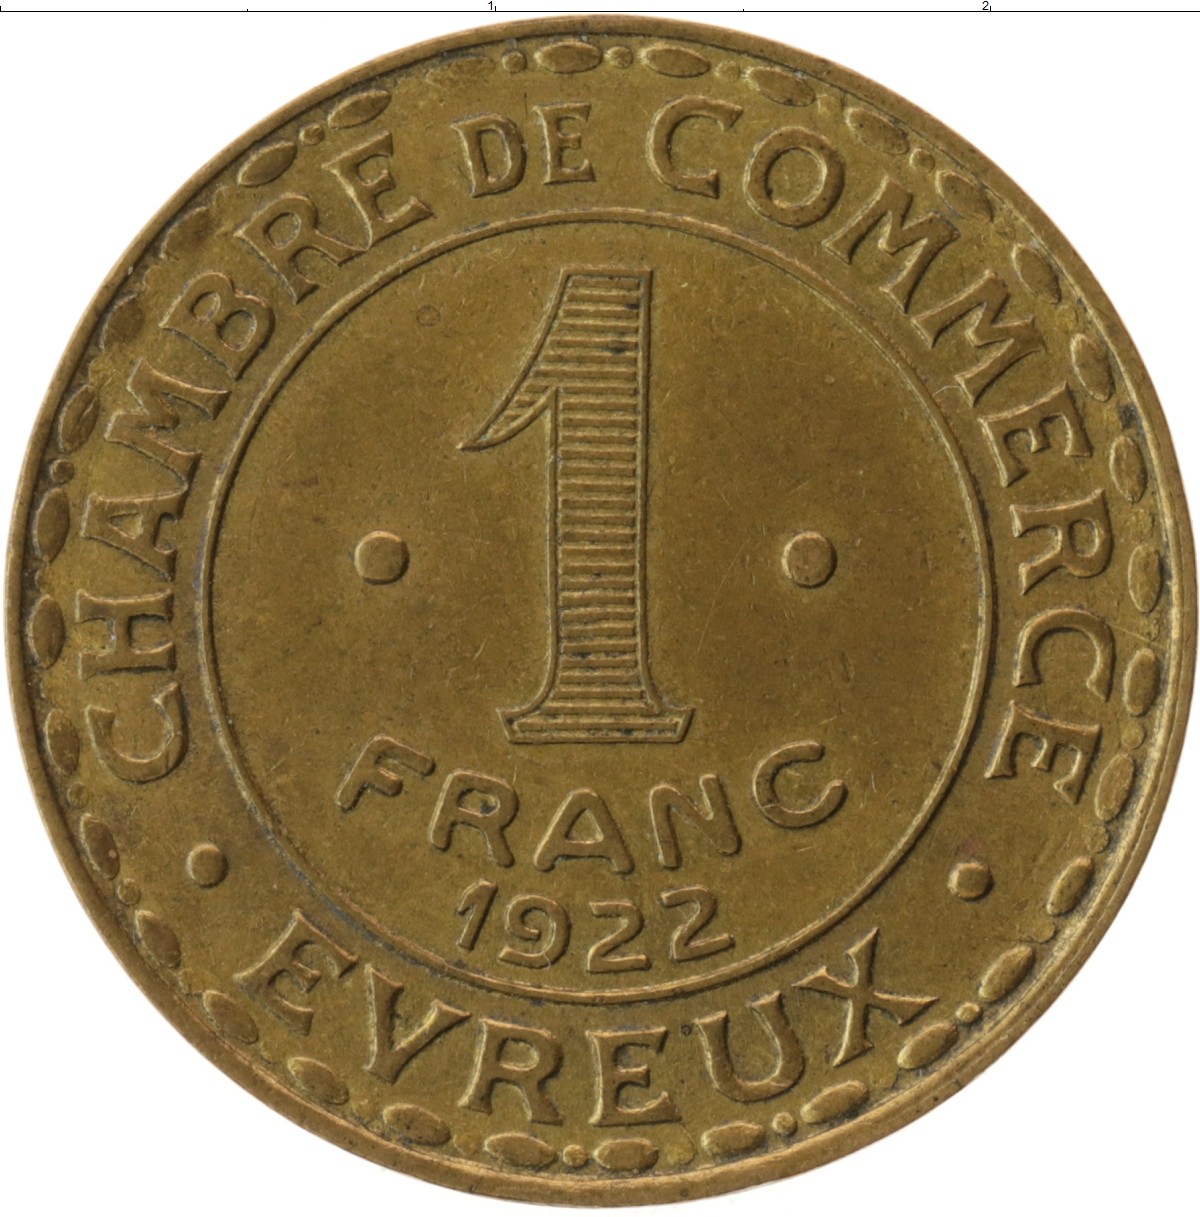 Французский франк к рублю. Франк 1922. Франция 1 Франк 1922. Монета 1 Франк Франция. Швейцарский Франк монета 1922.